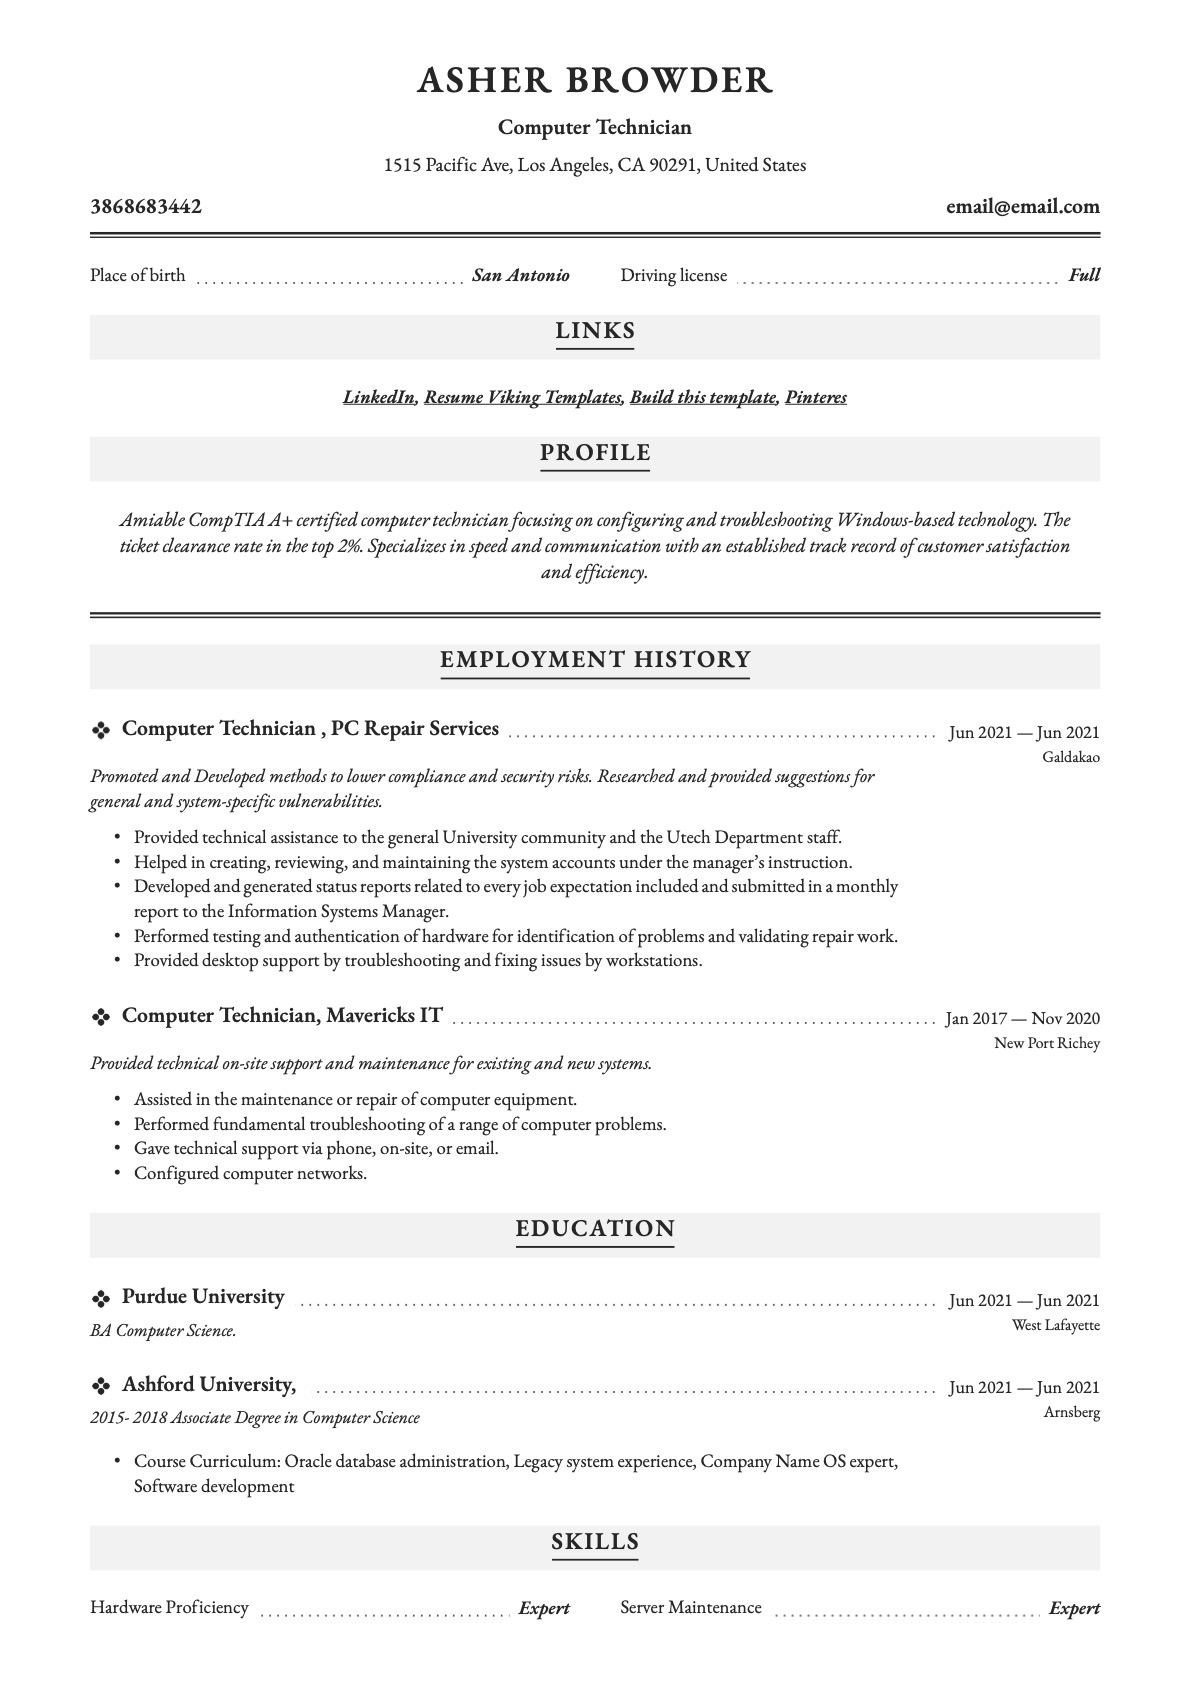 Professional Computer Technician Resume Example